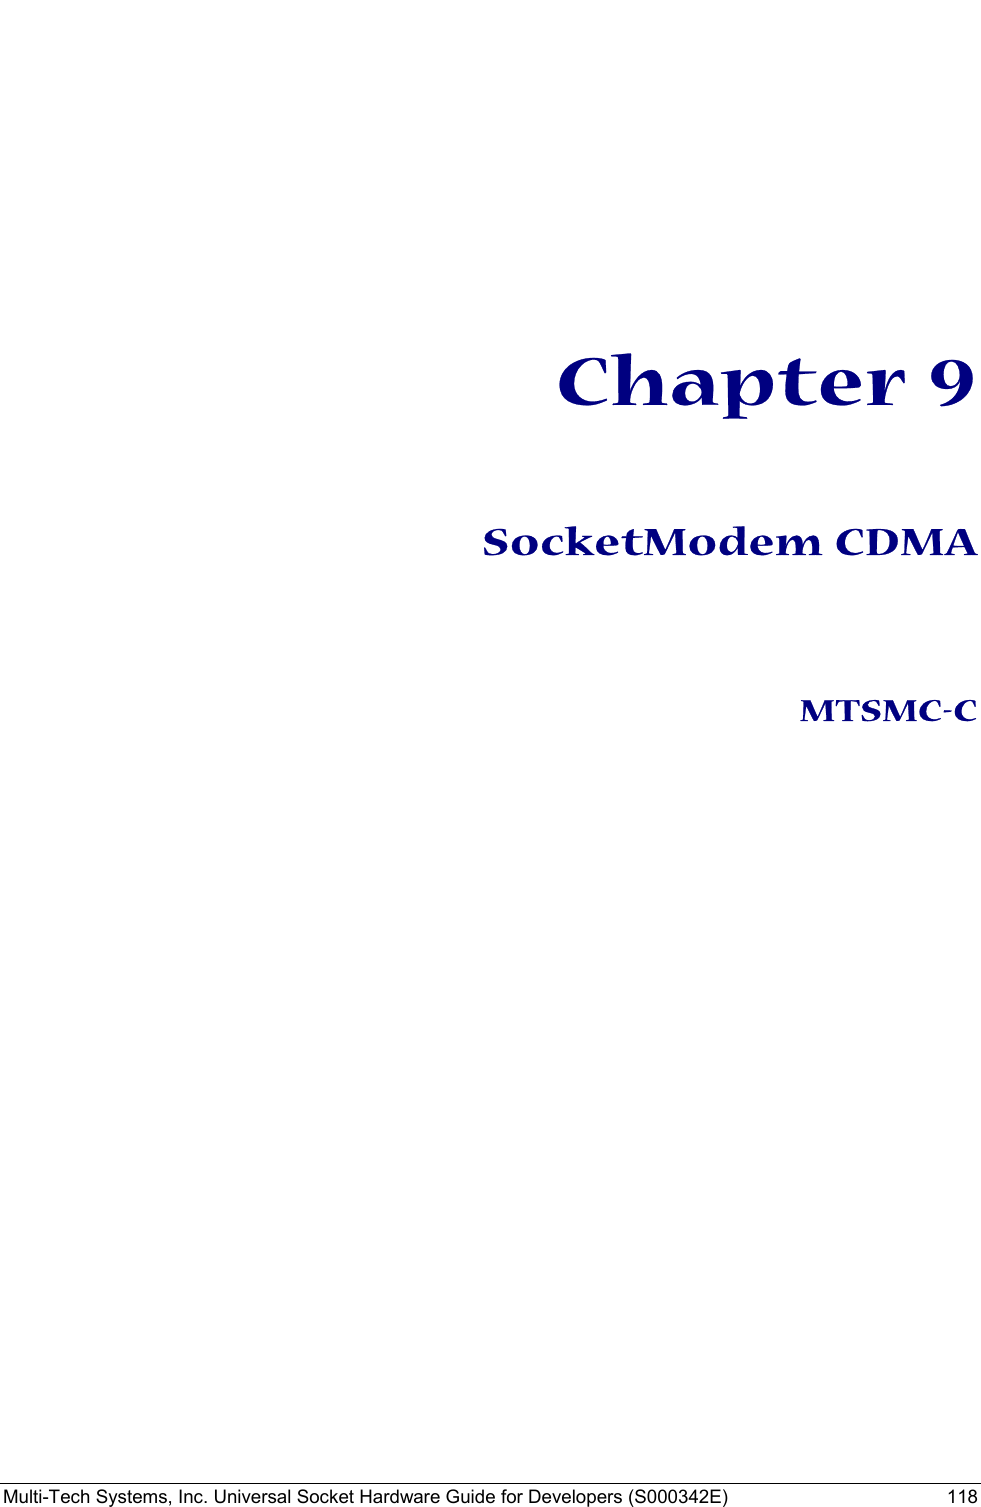  Multi-Tech Systems, Inc. Universal Socket Hardware Guide for Developers (S000342E)  118             Chapter 9    SocketModem CDMA    MTSMC-C   